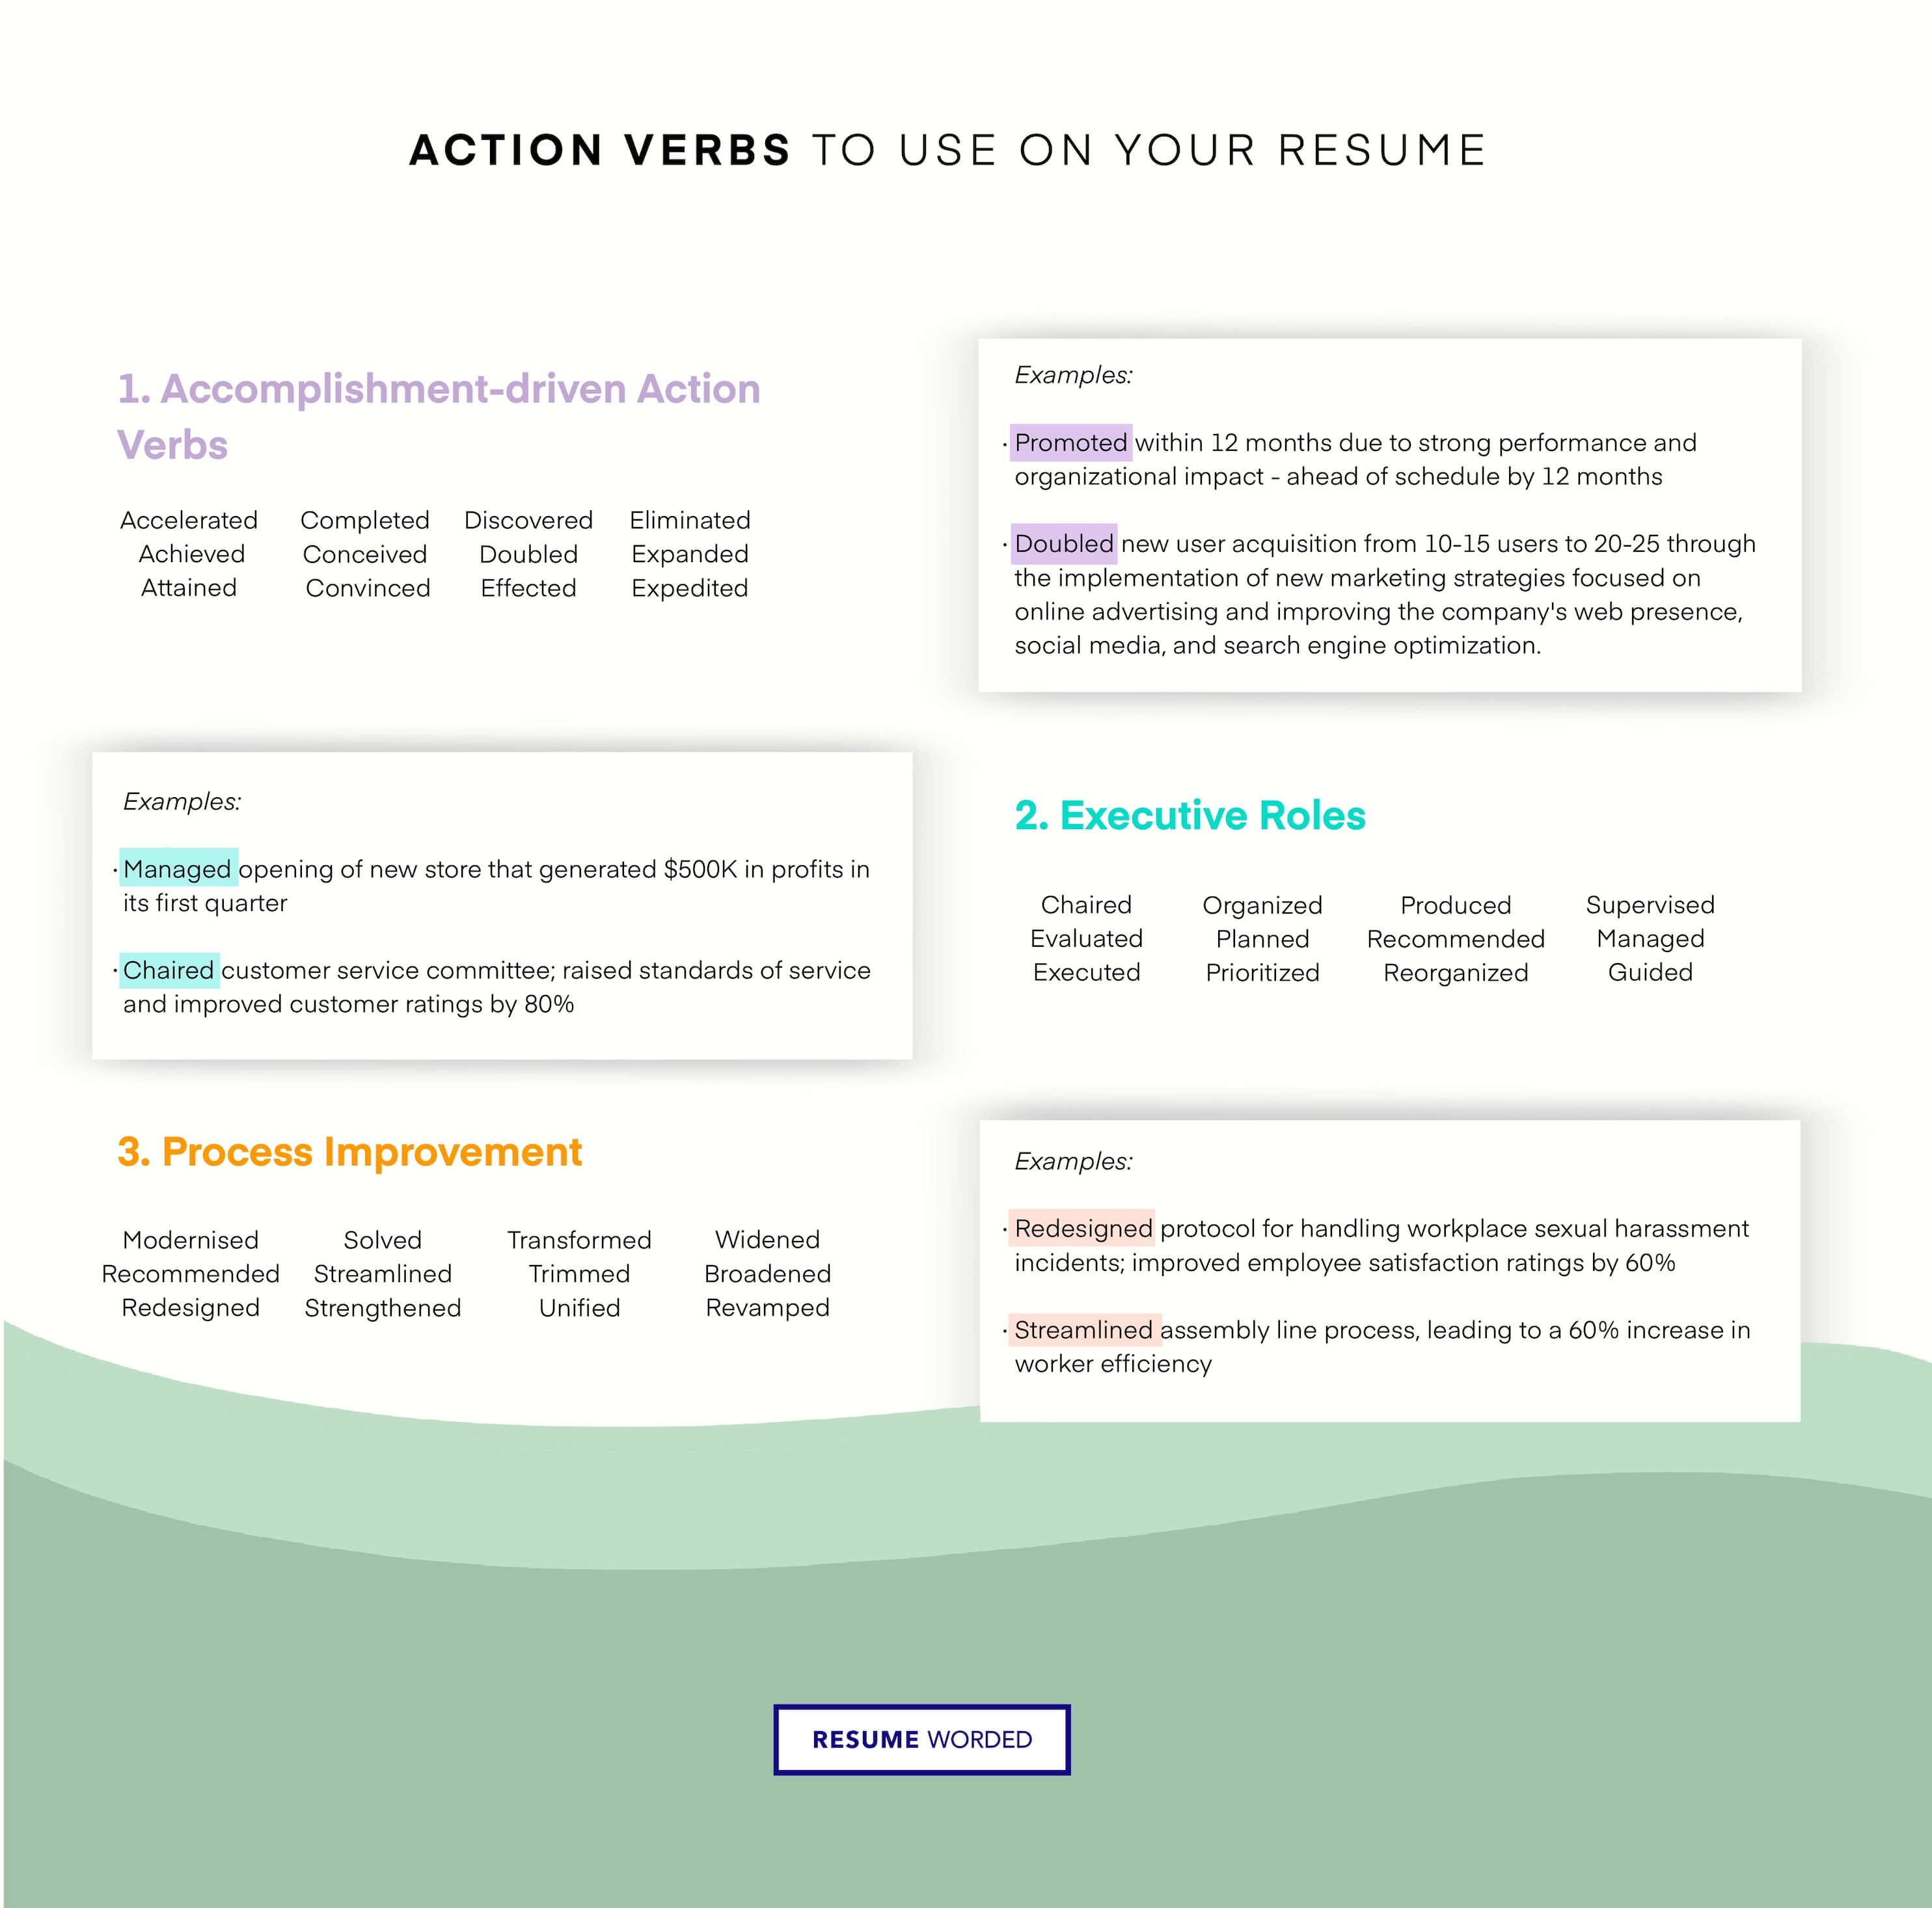 Action verbs demonstrate leadership - Senior HR Manager & HR Director (Human Resources Director) Resume